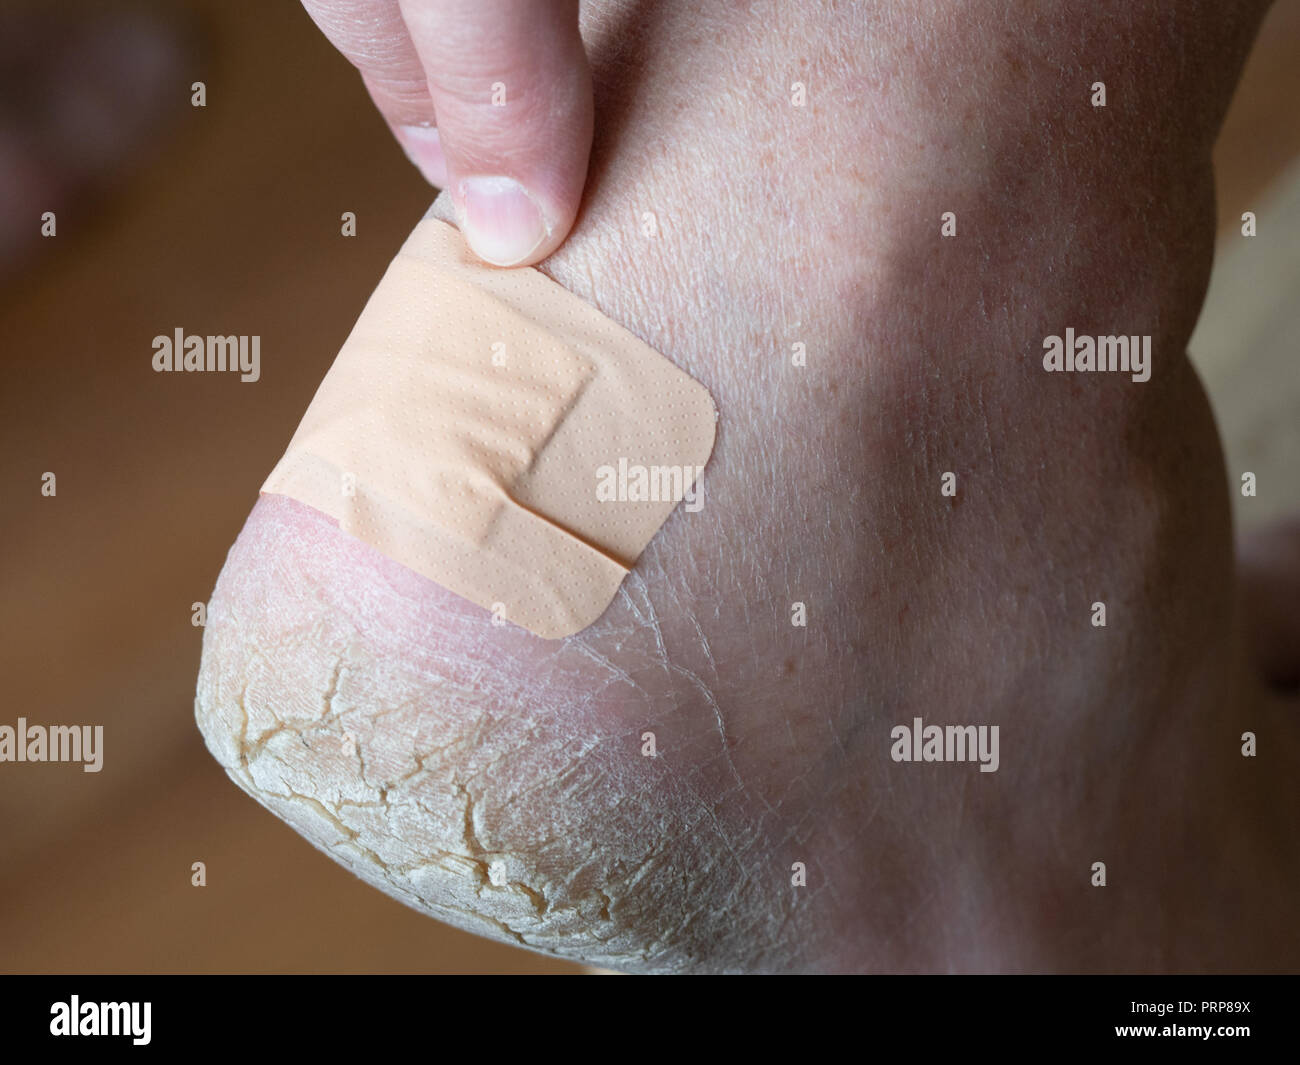 adhesive bandage closes callus on heel close up Stock Photo